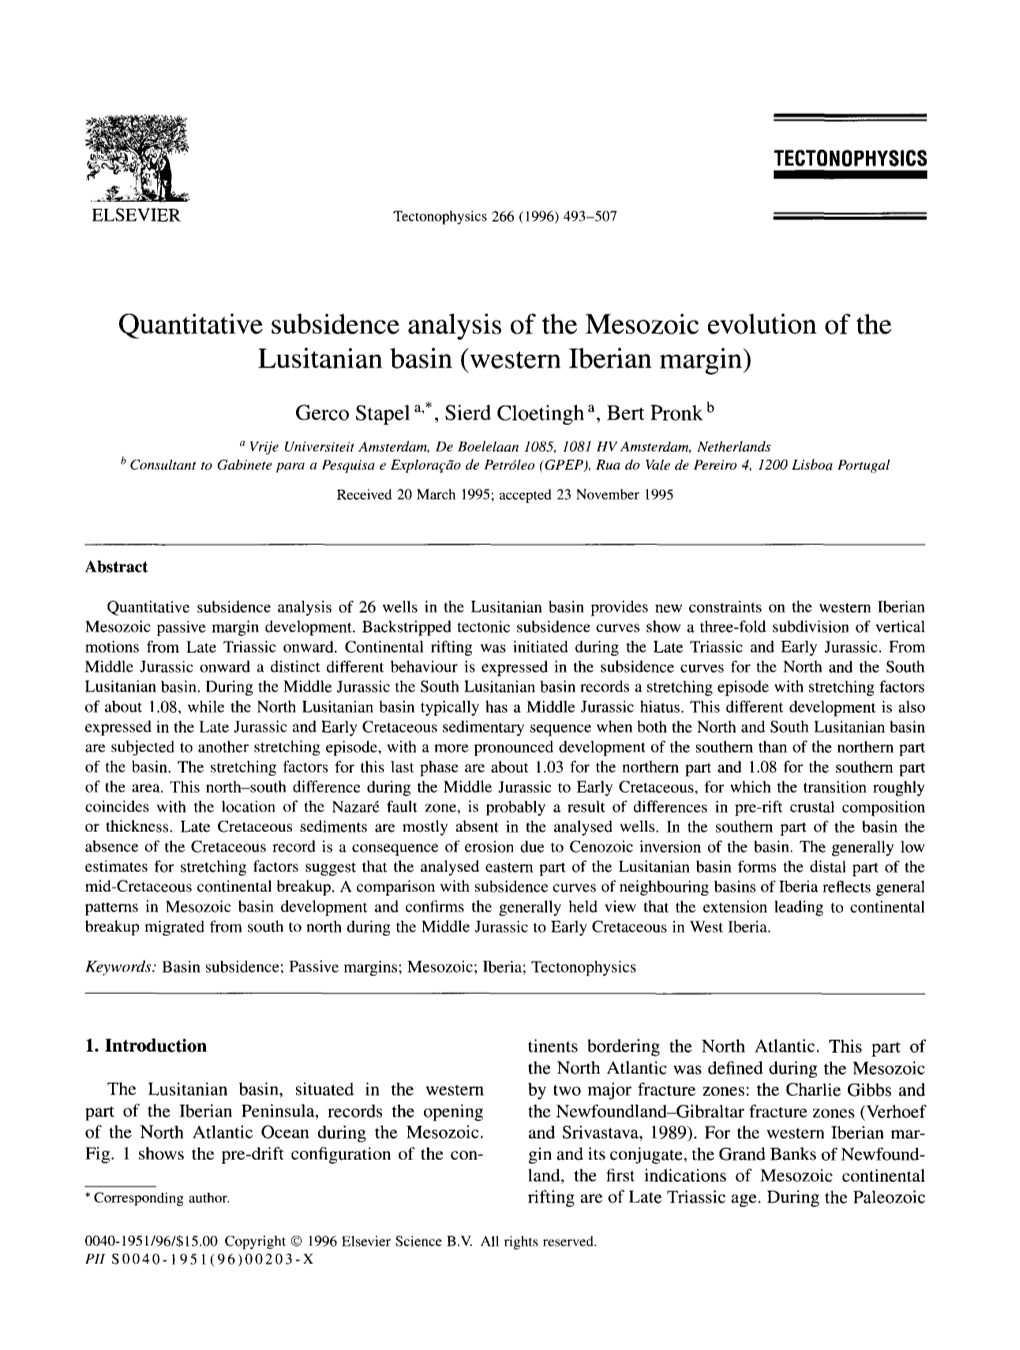 Quantitative Subsidence Analysis of the Mesozoic Evolution of the Lusitanian Basin (Western Iberian Margin)